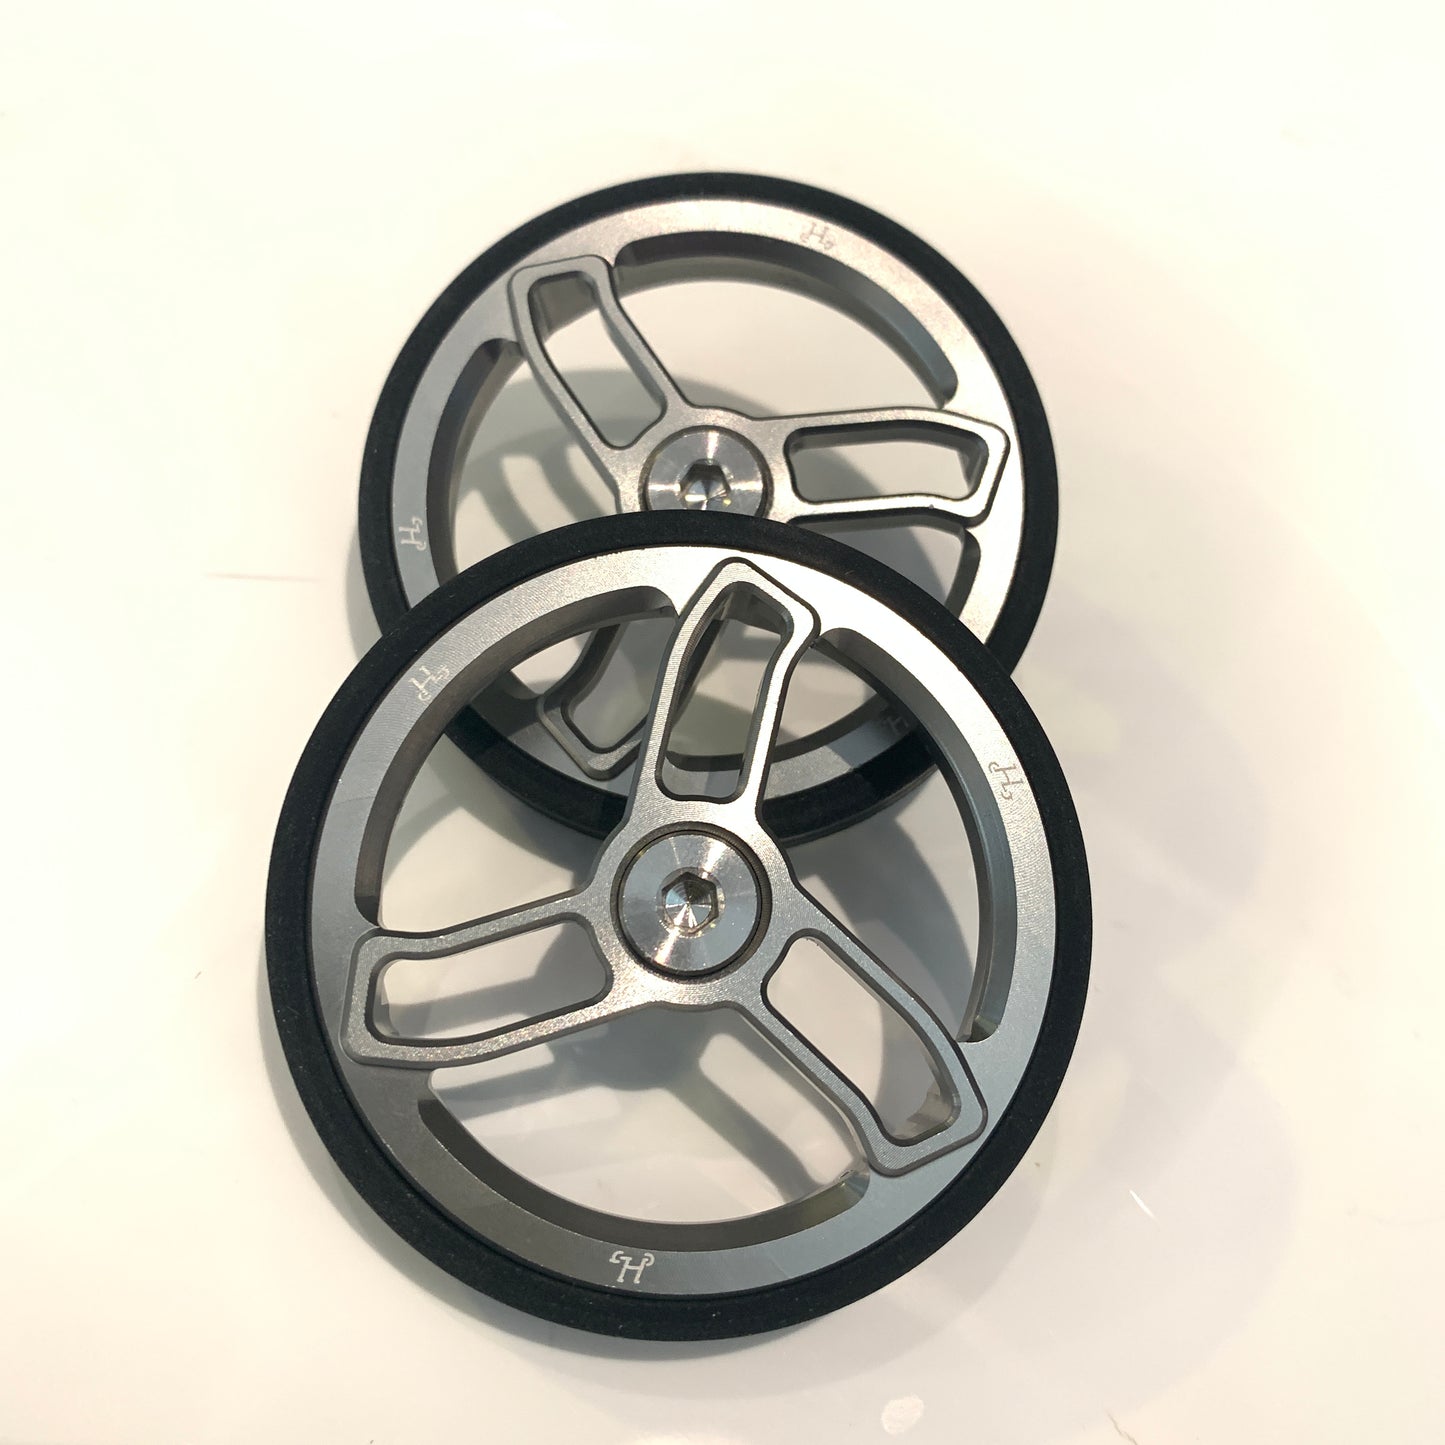 H&H 63mm Ezy wheels